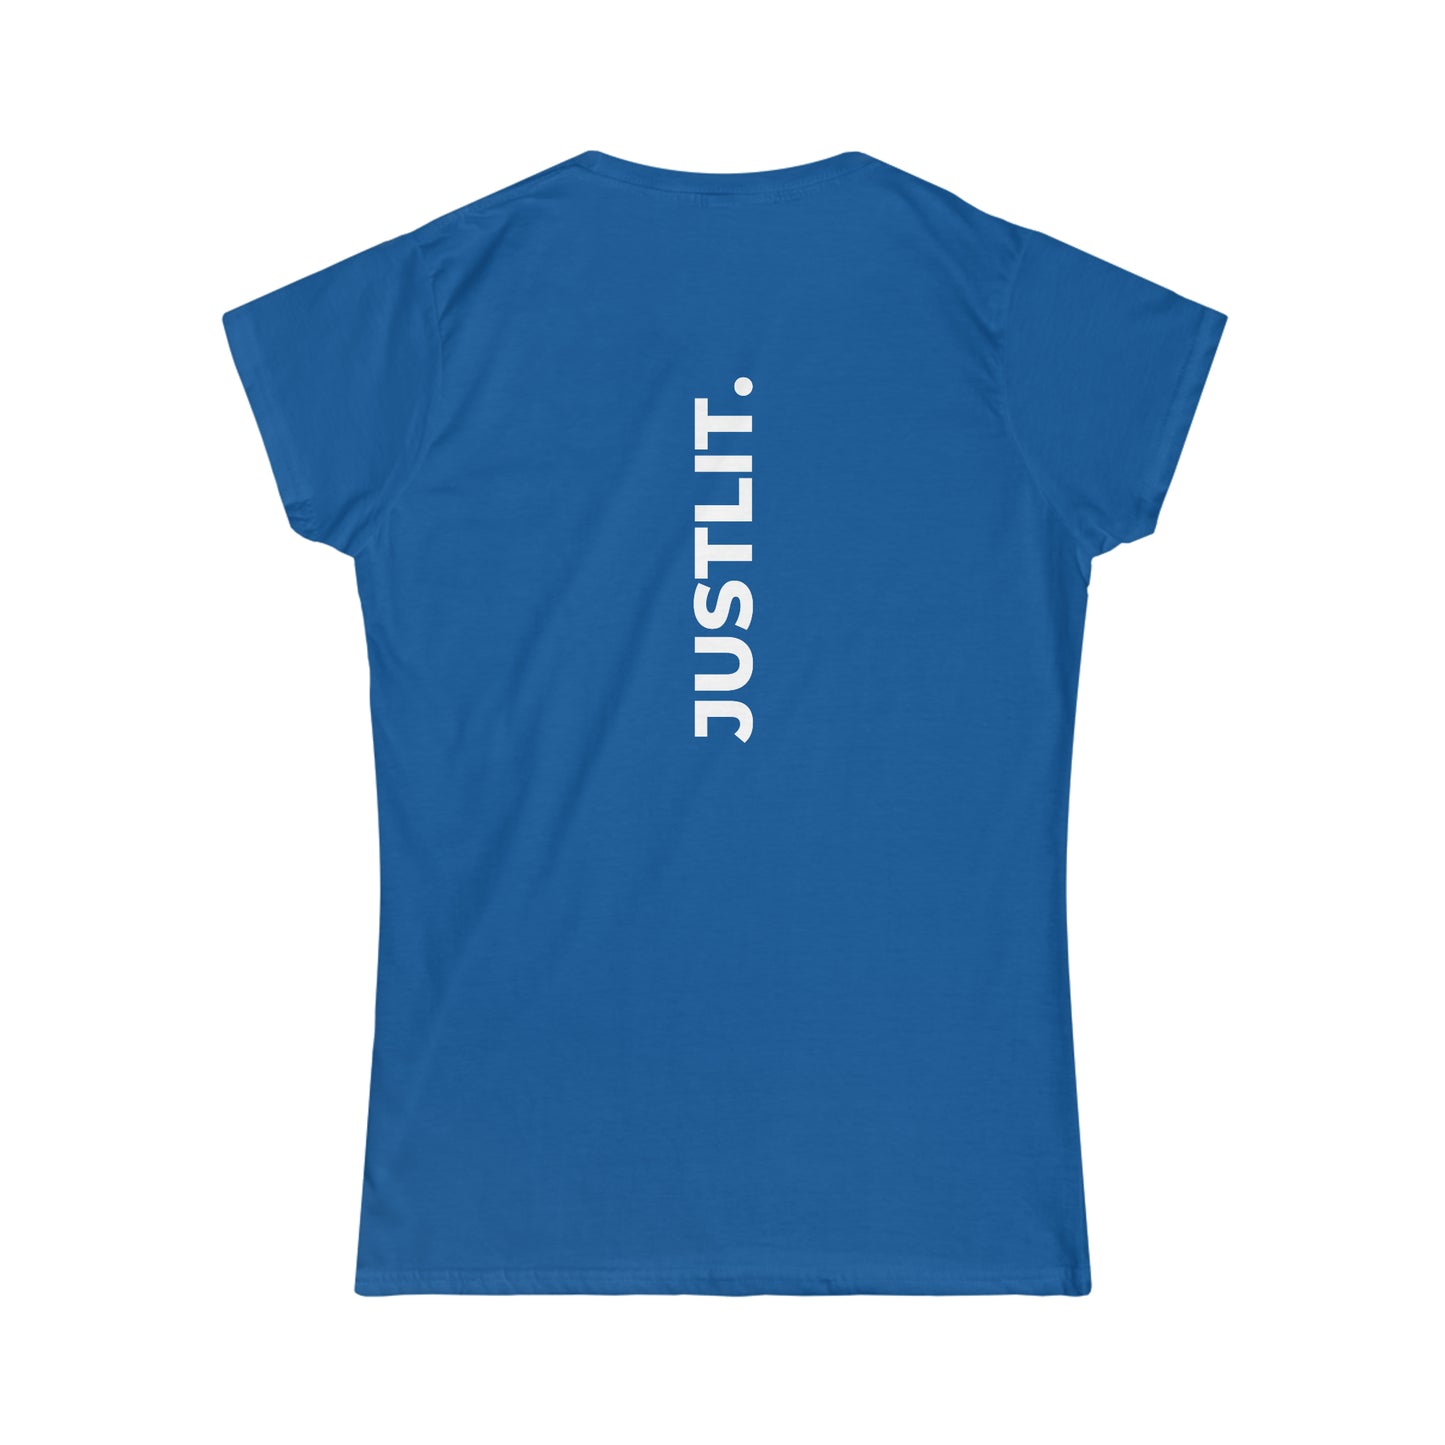 JustLit Women's T-Shirt